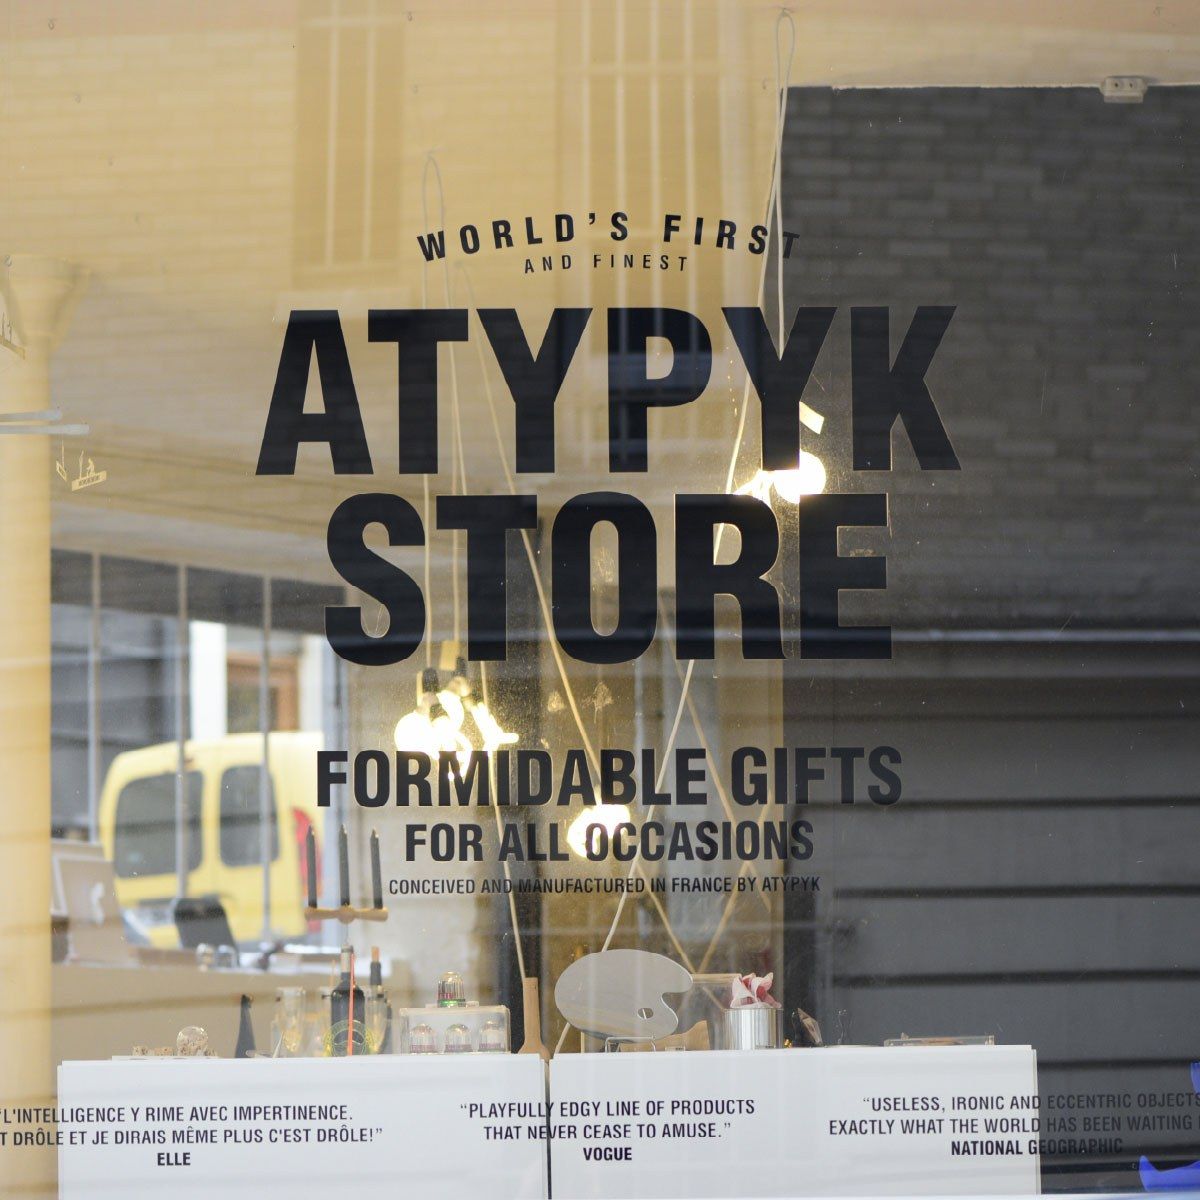 Atypyk Store